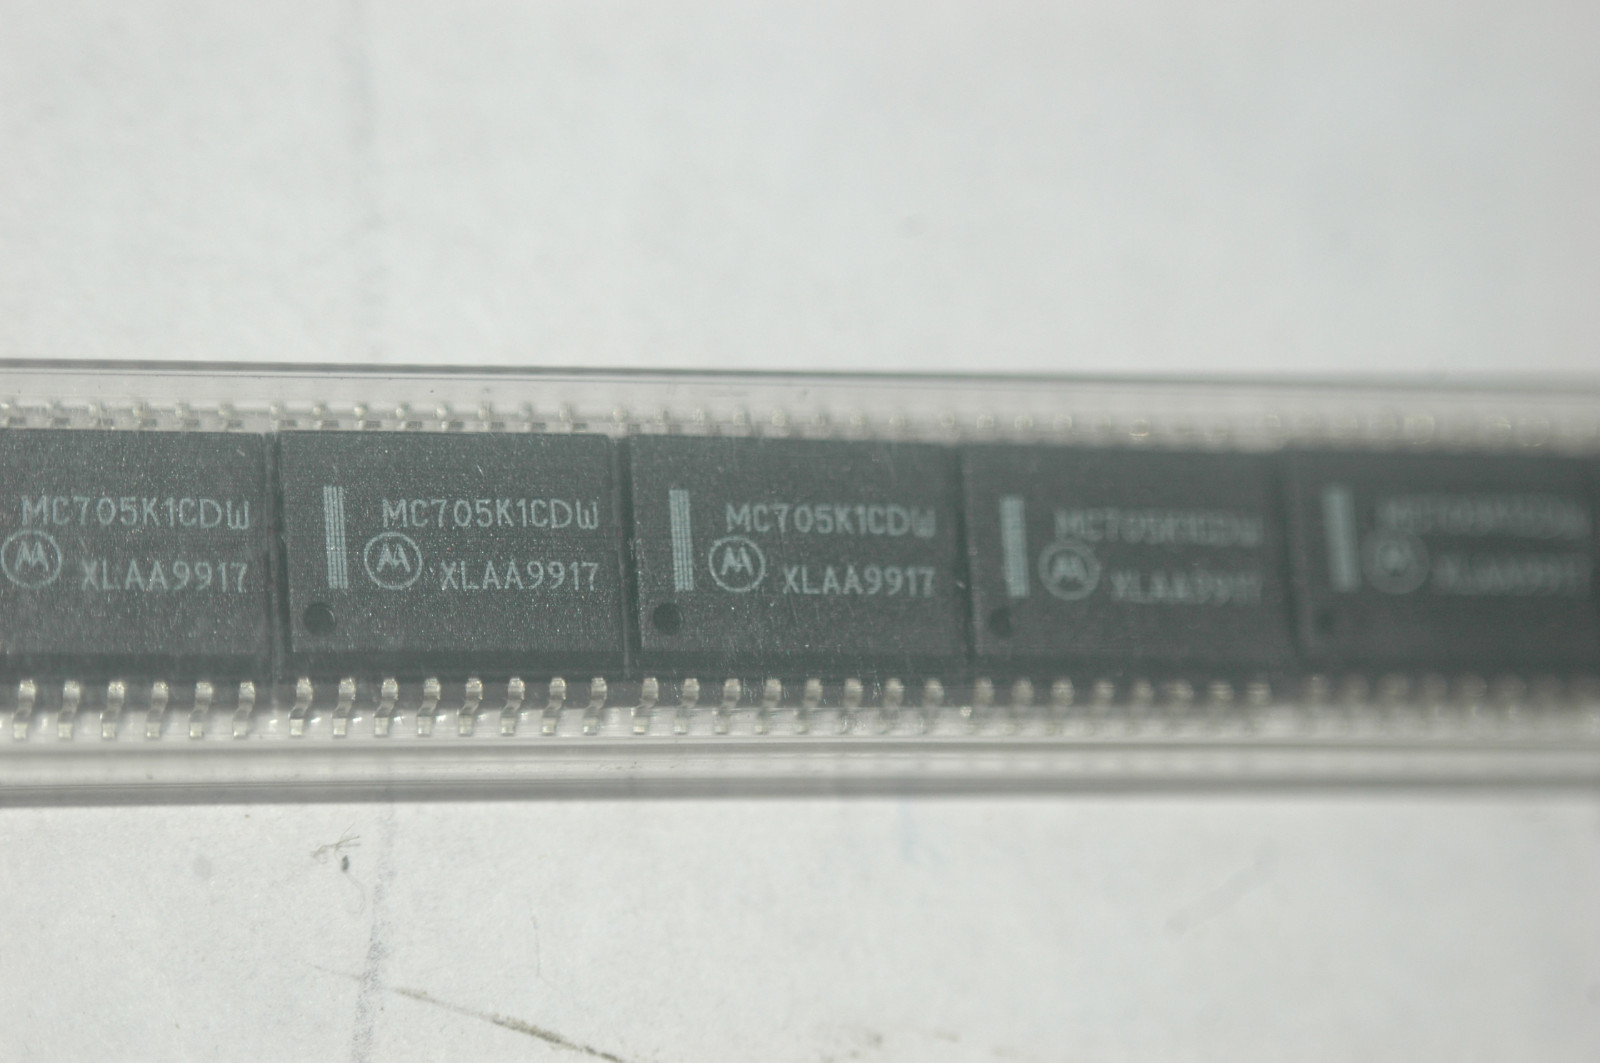 Nice wallpapers Motorola Microcontroller 1600x1063px